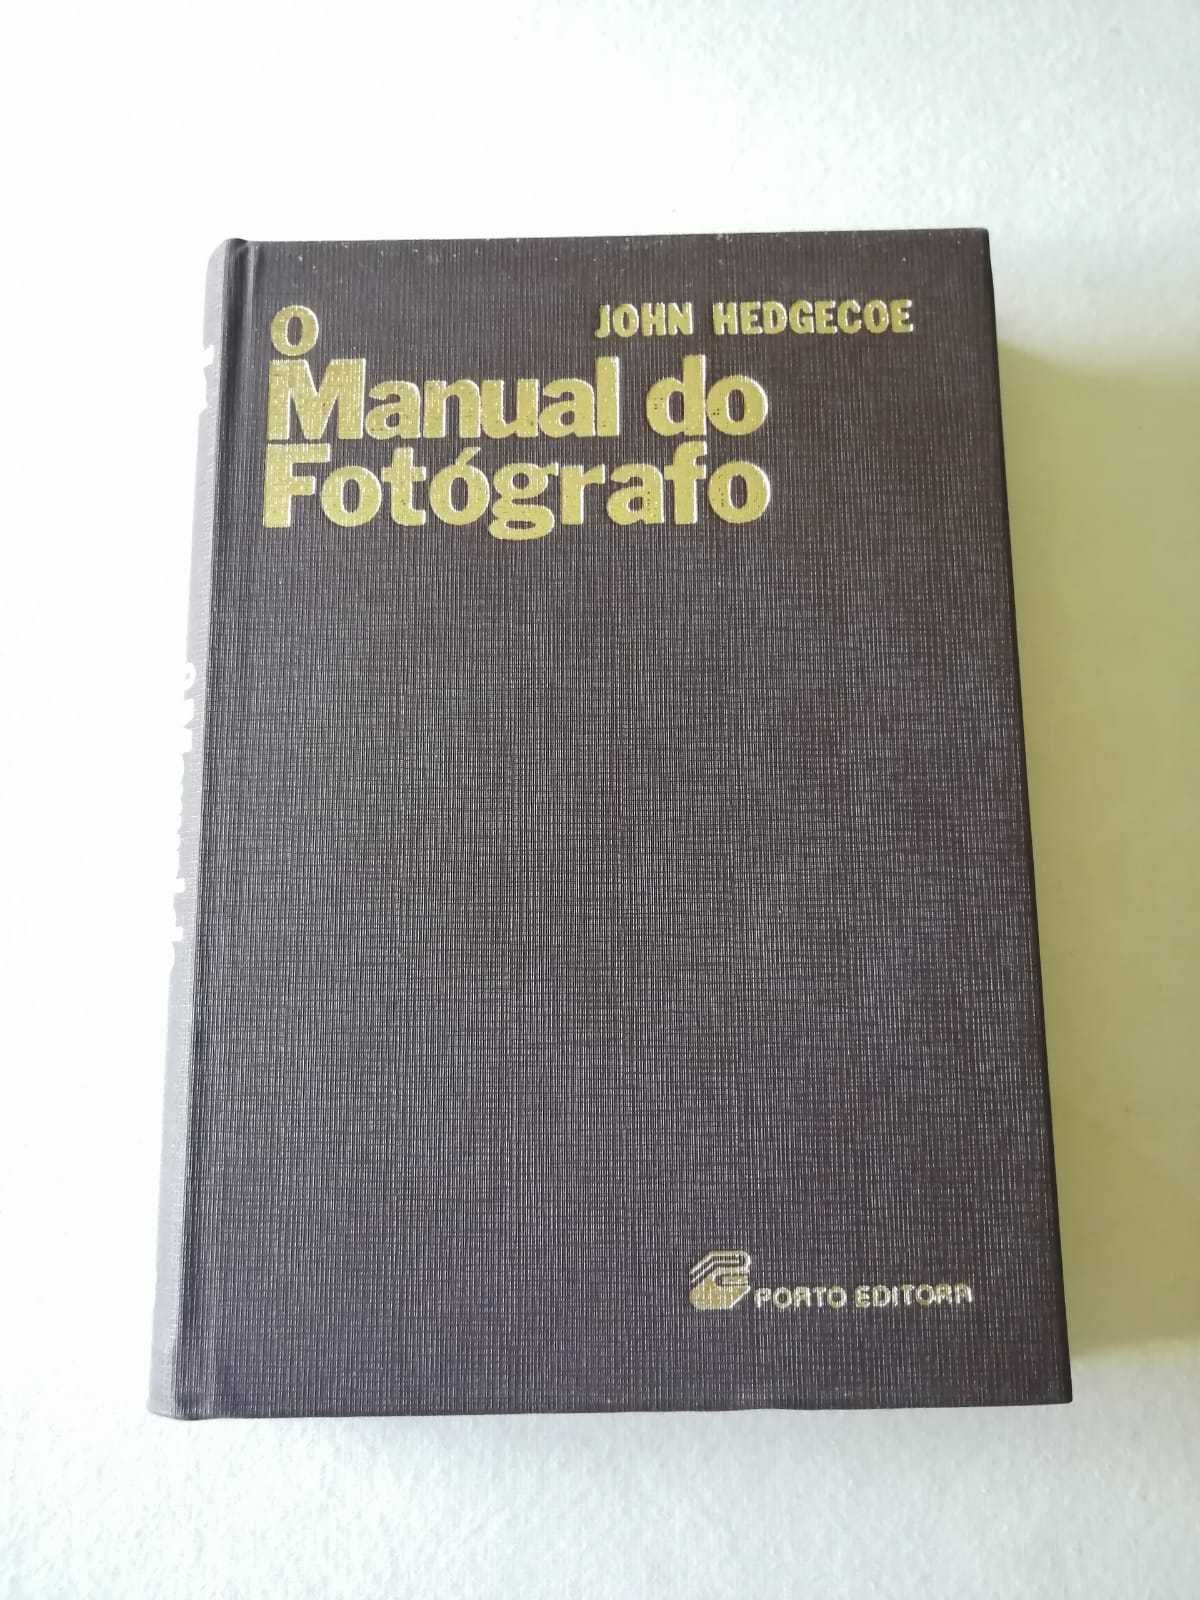 Manual do Fotógrafo - John Hendgecoe (Porto Editora)